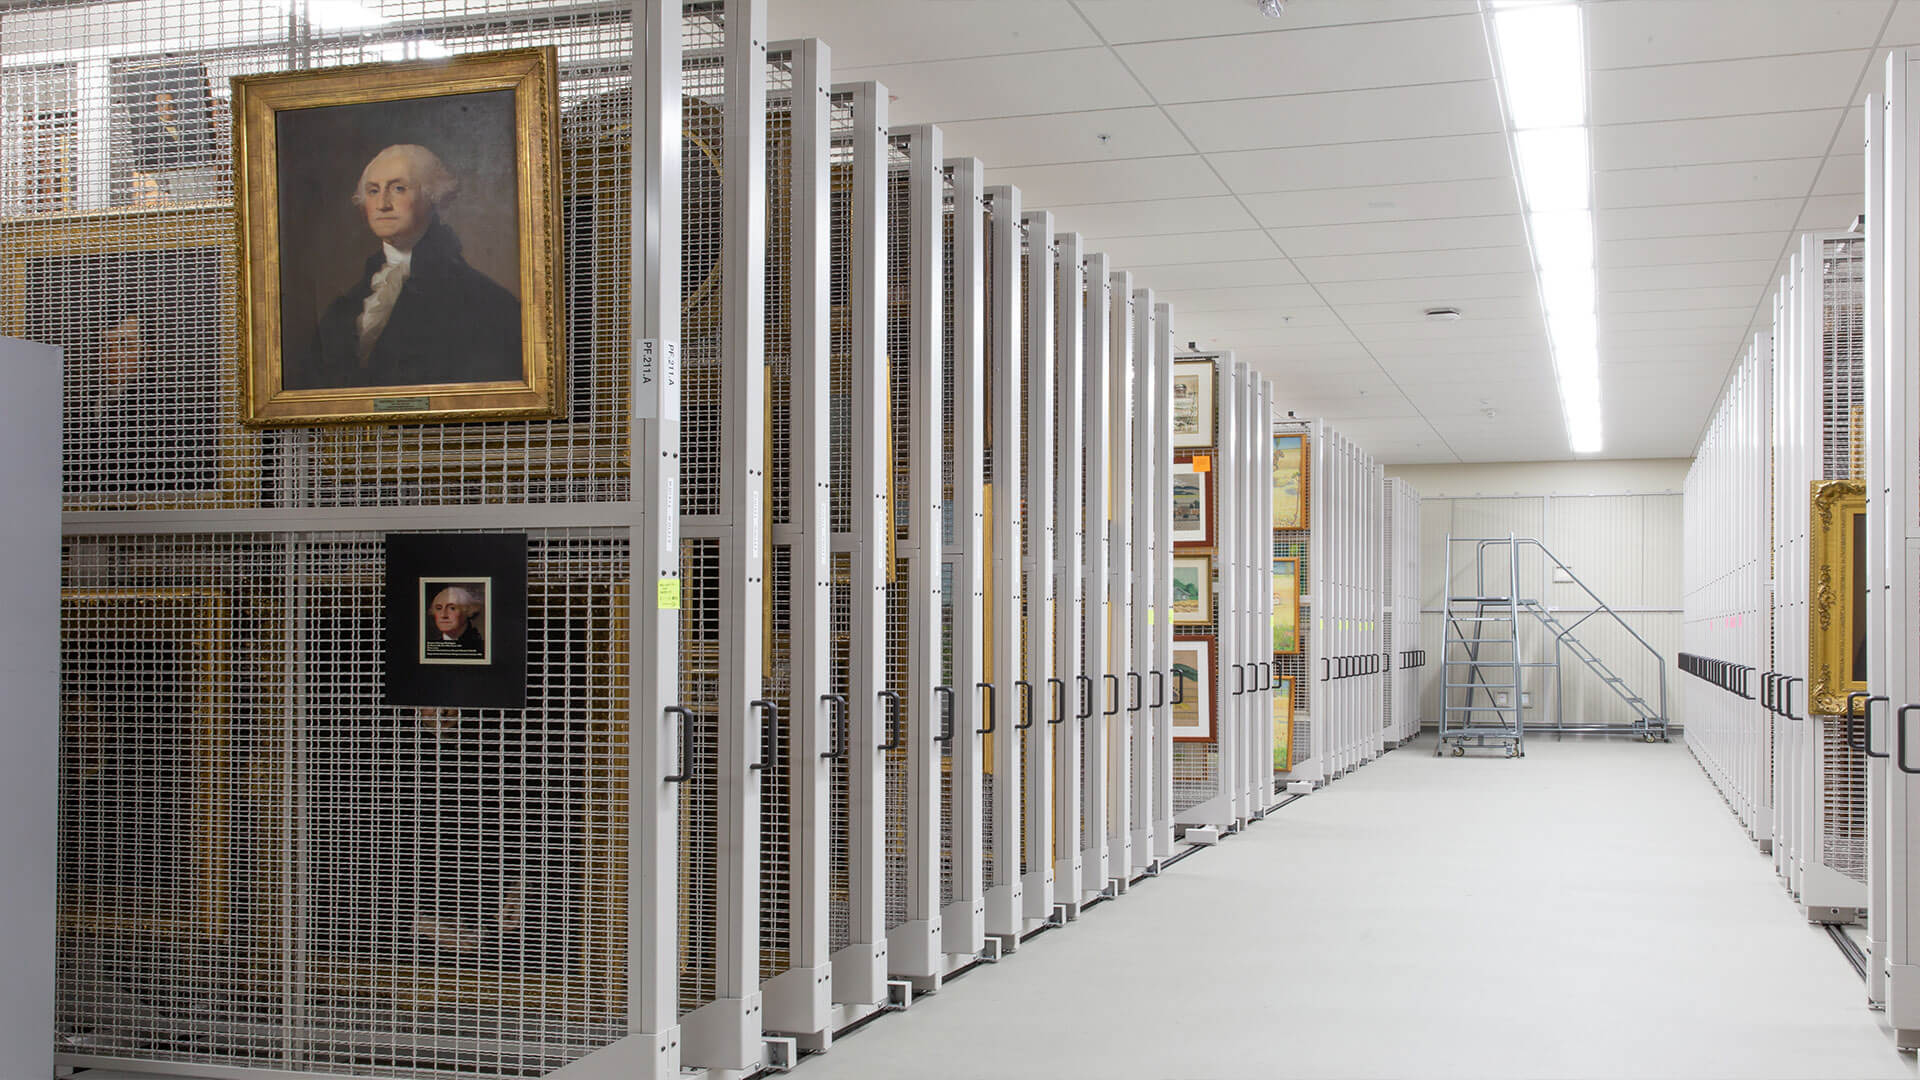 art-rack-high-density-storage-hanging-artwork-racks